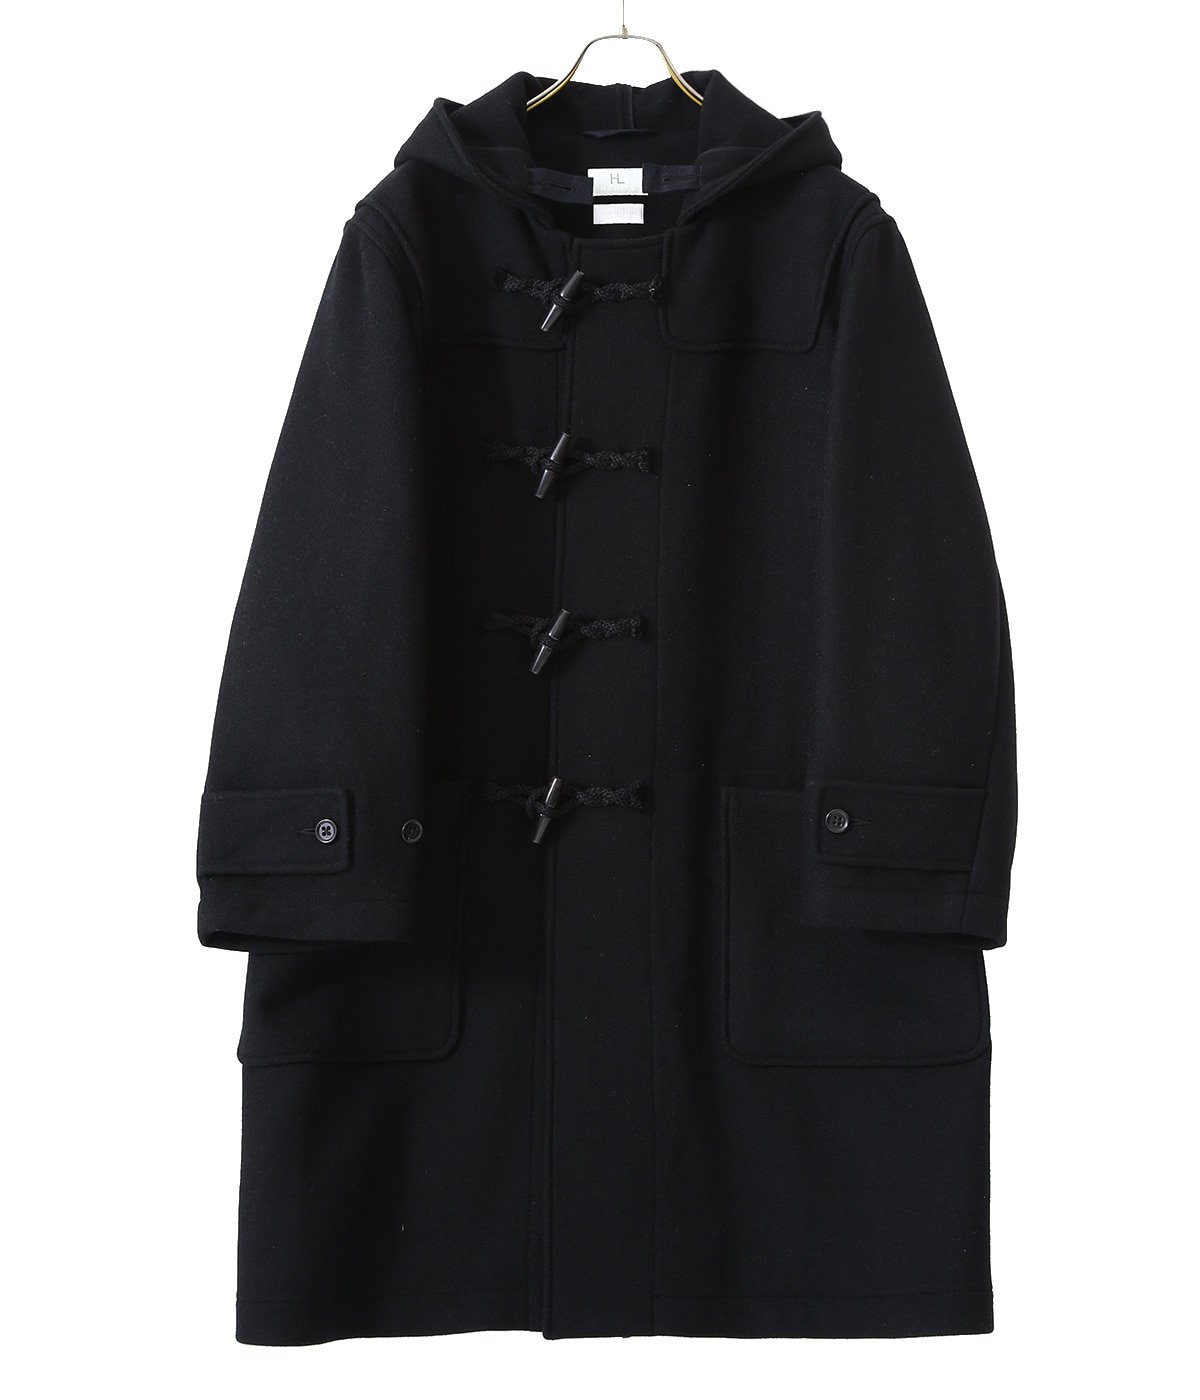 Natural cashmere duffle coat: HERILL(へリル): MEN - ARKnets(アークネッツ) メンズ